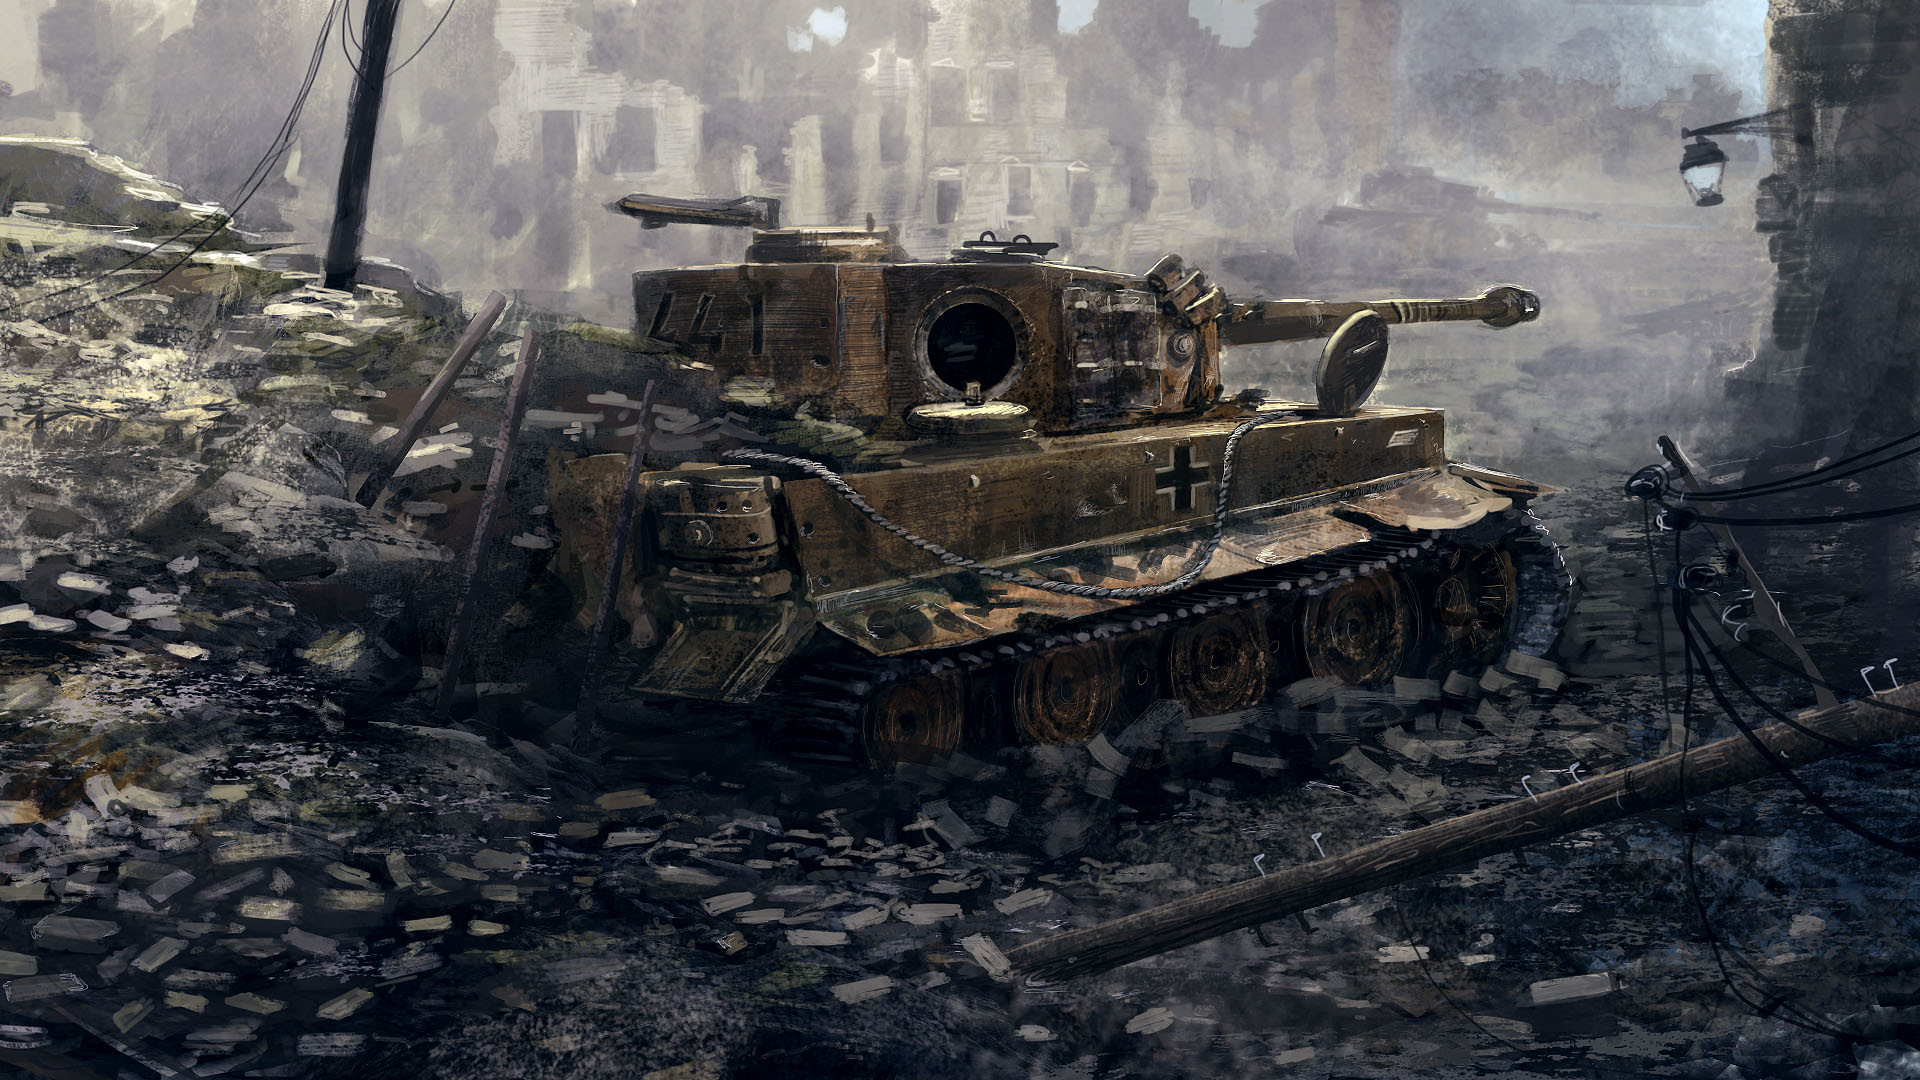 1920x1080 Sniper Elite - Tiger Tank | Steam Trading Cards Wiki | FANDOM powered by  Wikia